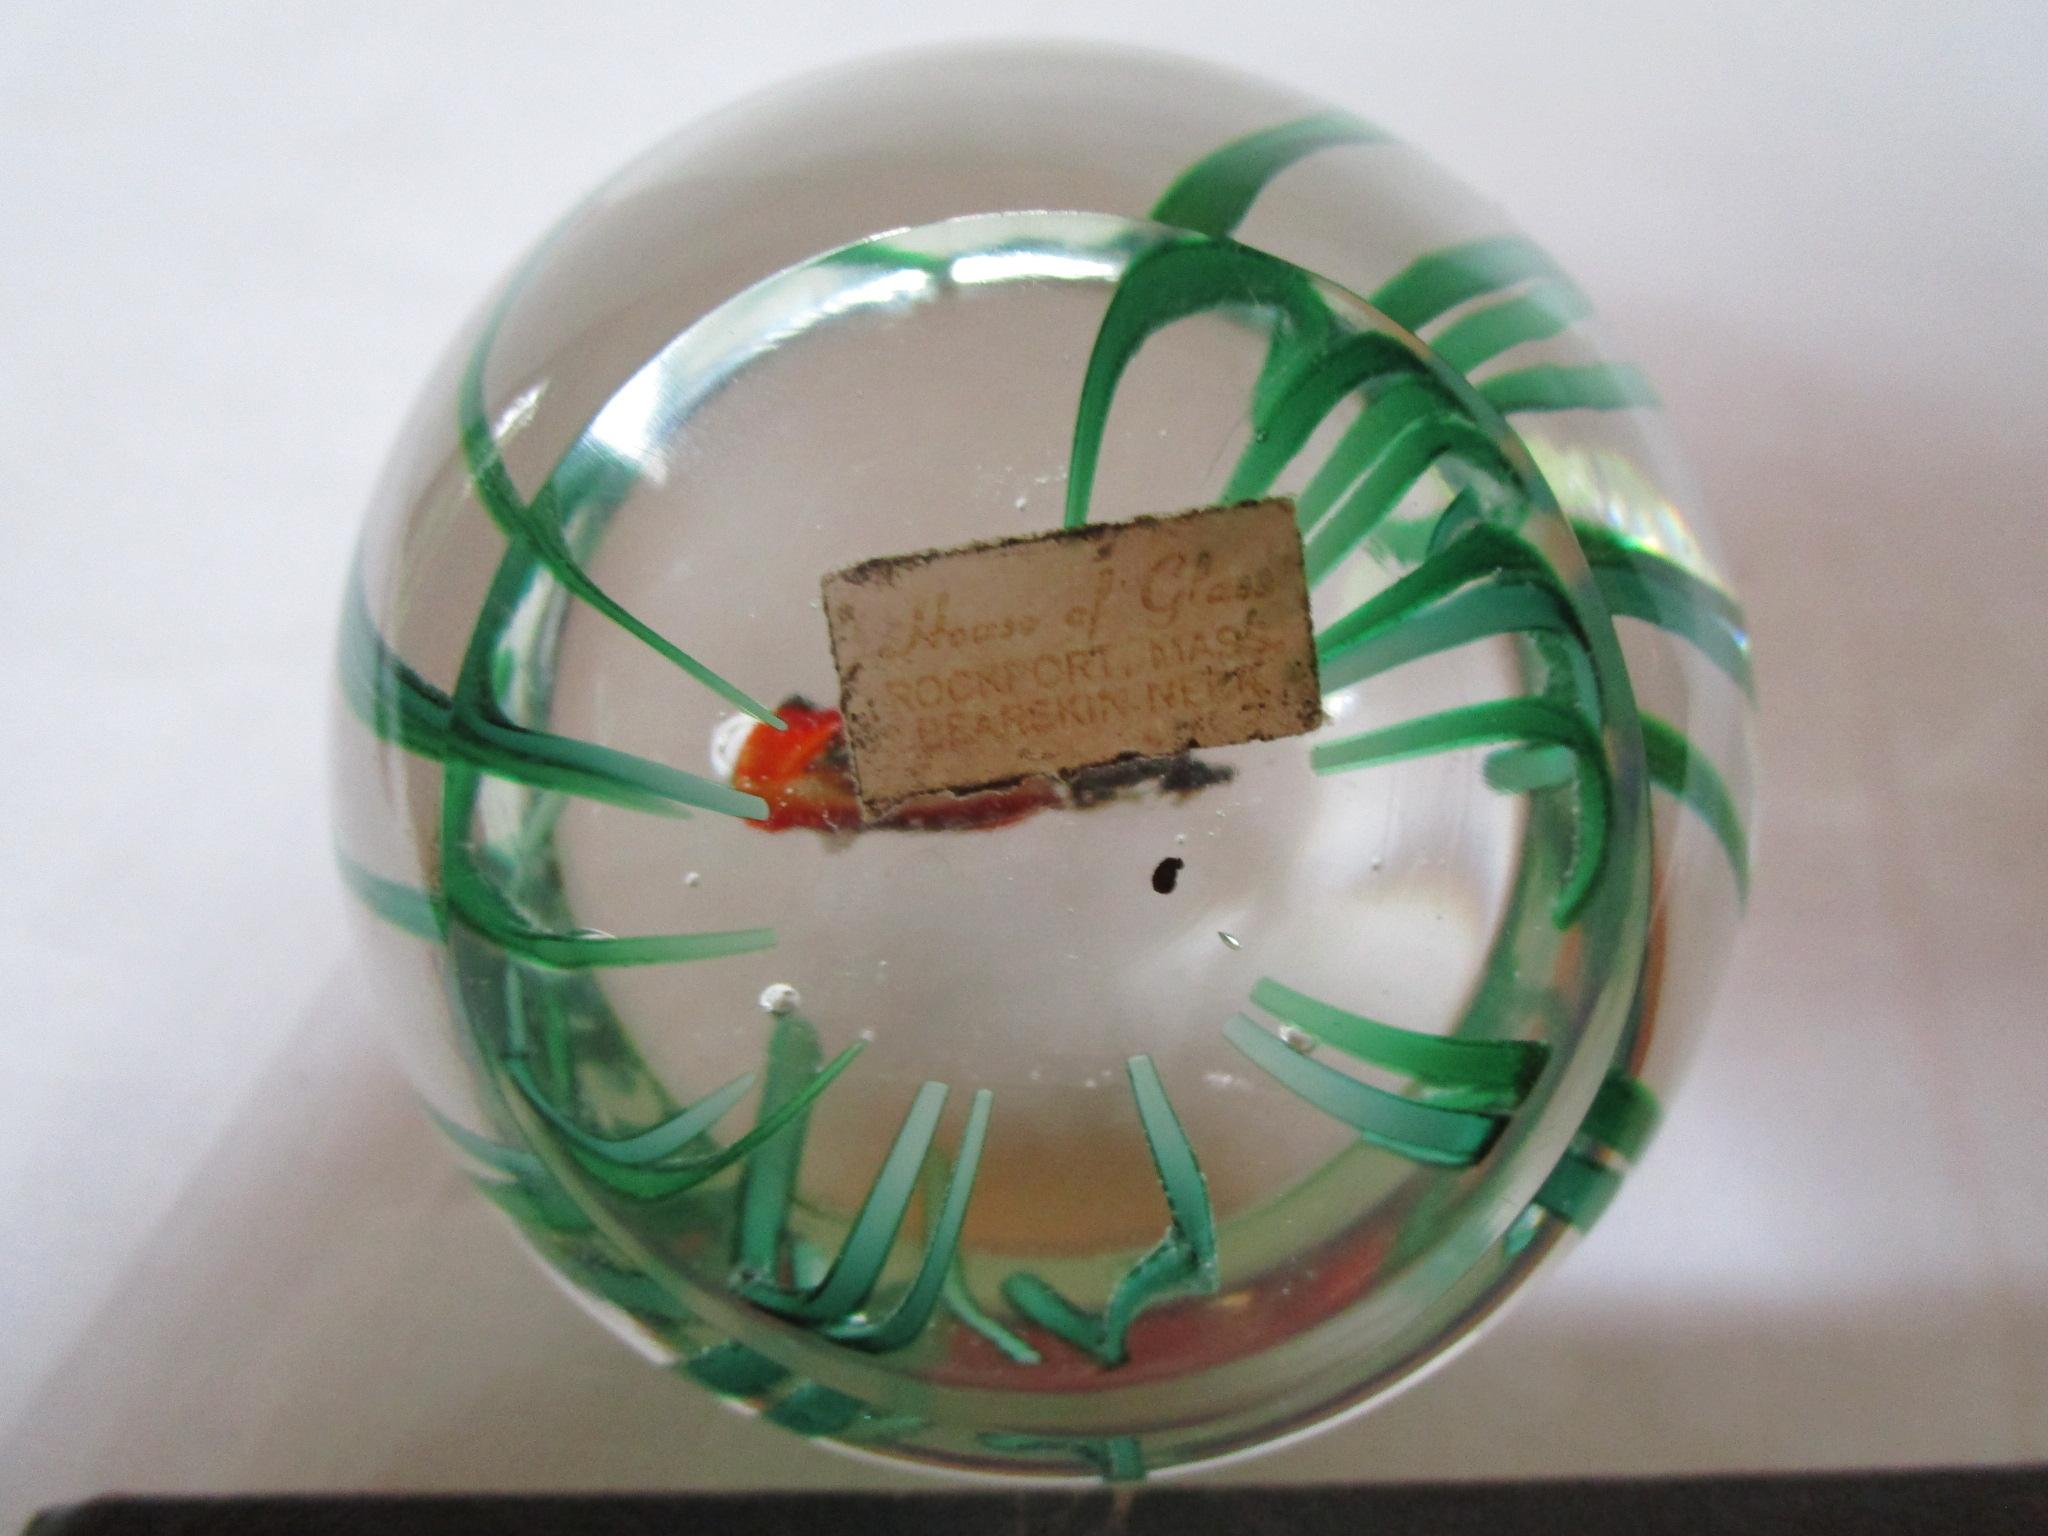 Art Glass Paperweight Fish Scene w/ House of Glass Original Label